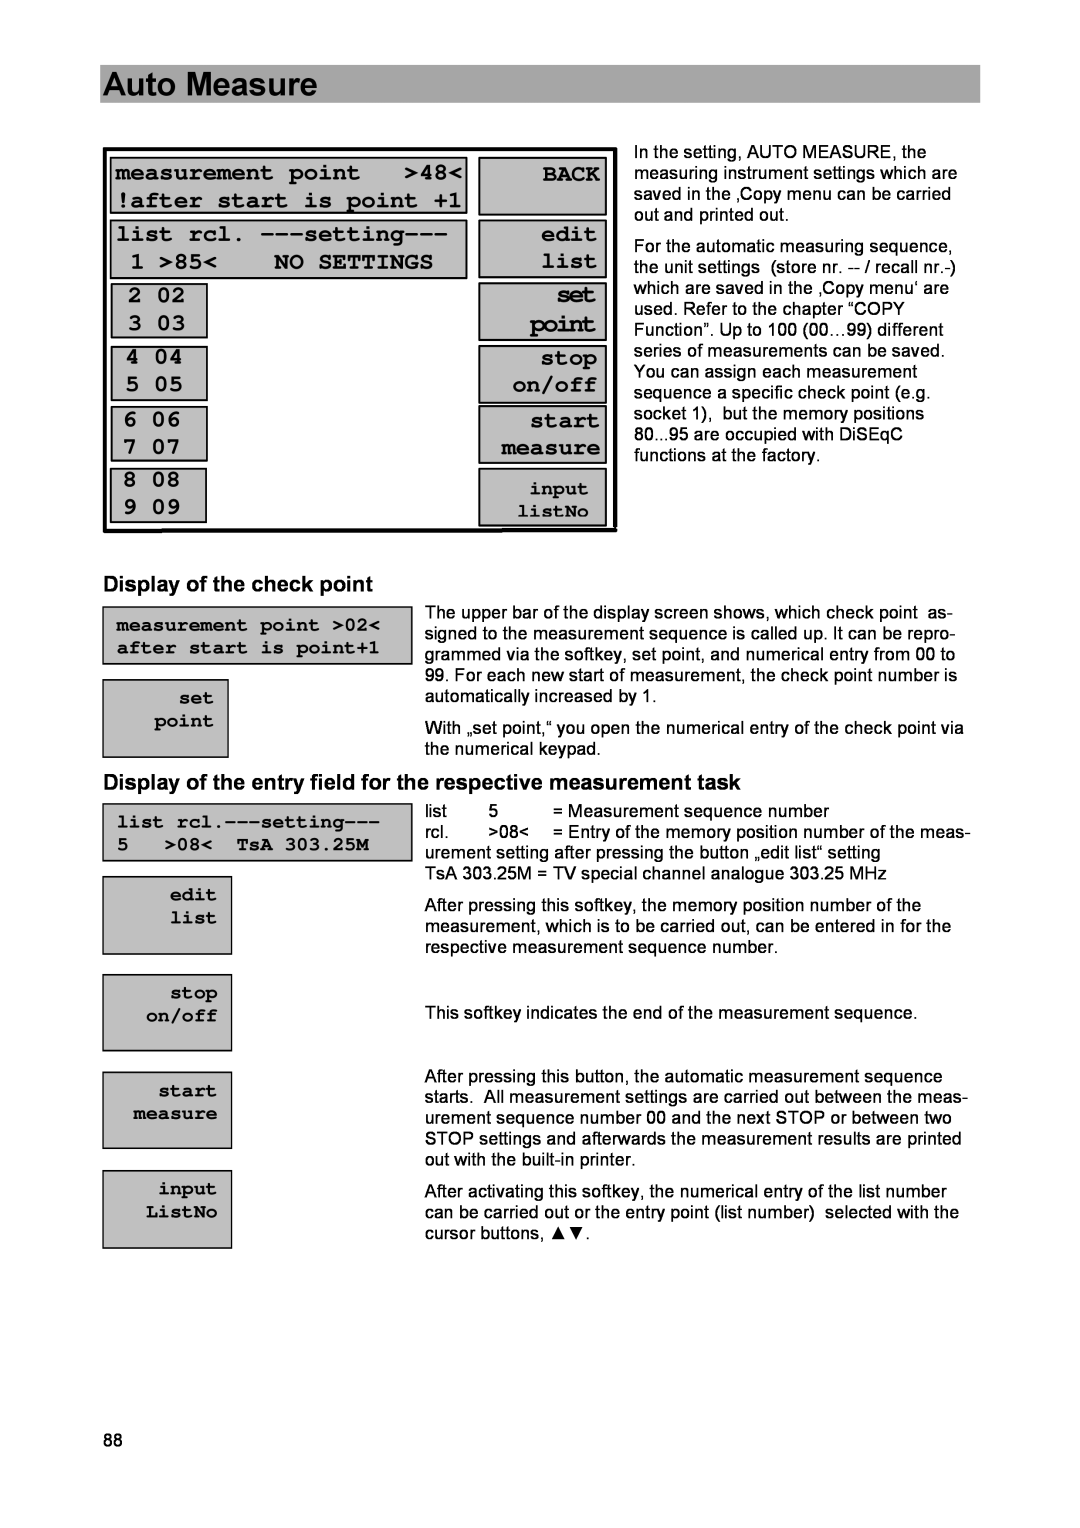 DreamGEAR MSK 33 Auto Measure, measurement point, list rcl. ---setting, edit, No Settings, stop, on/off, start, inpu 